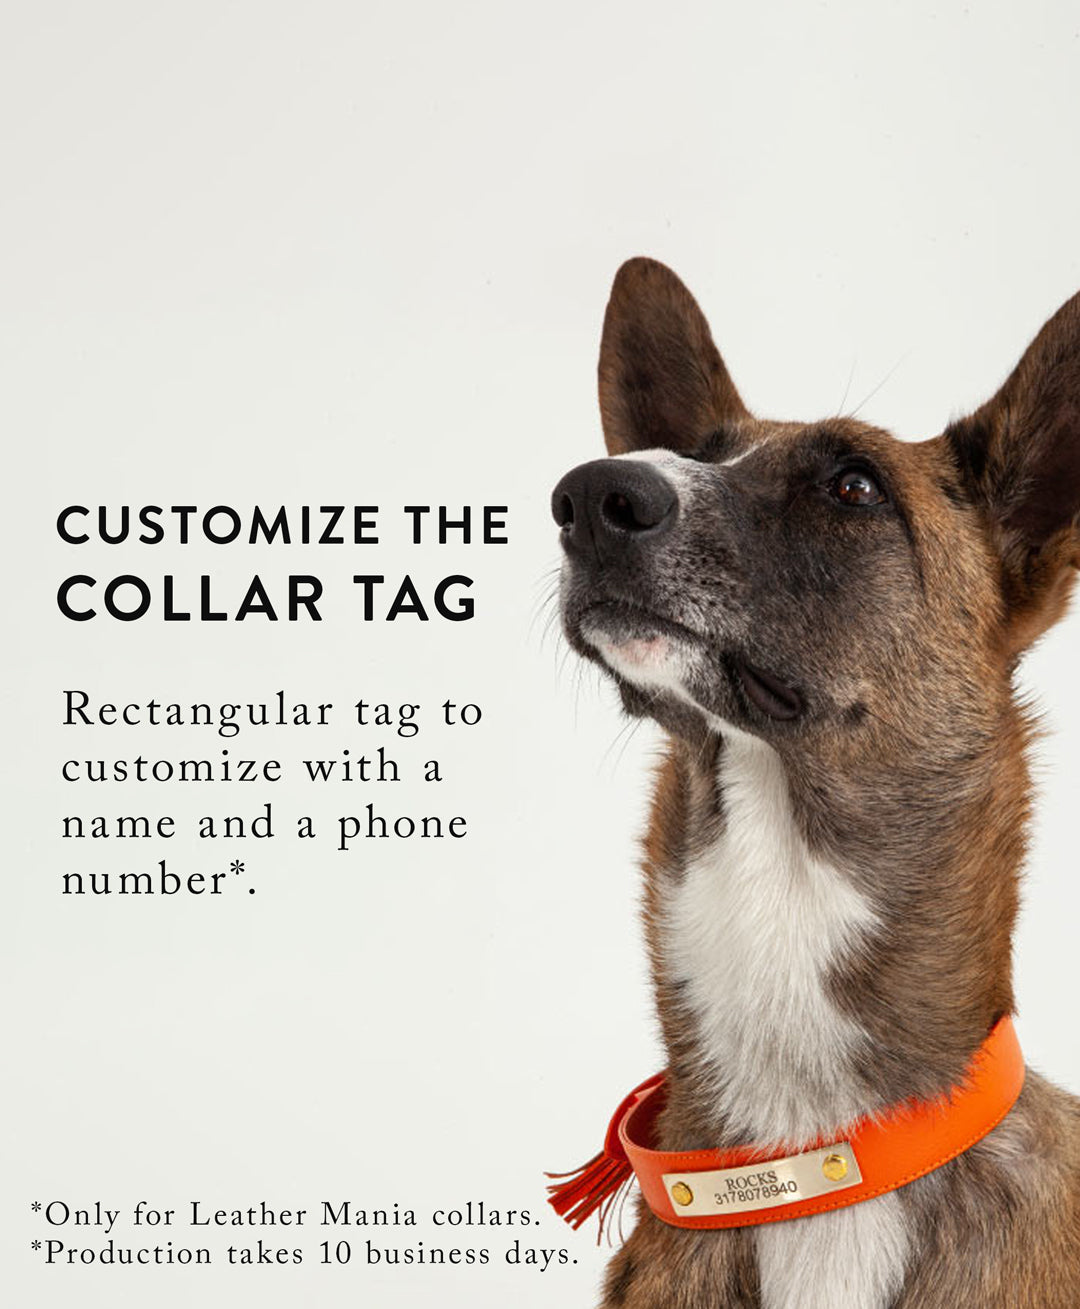 Aubergine leather dog collar